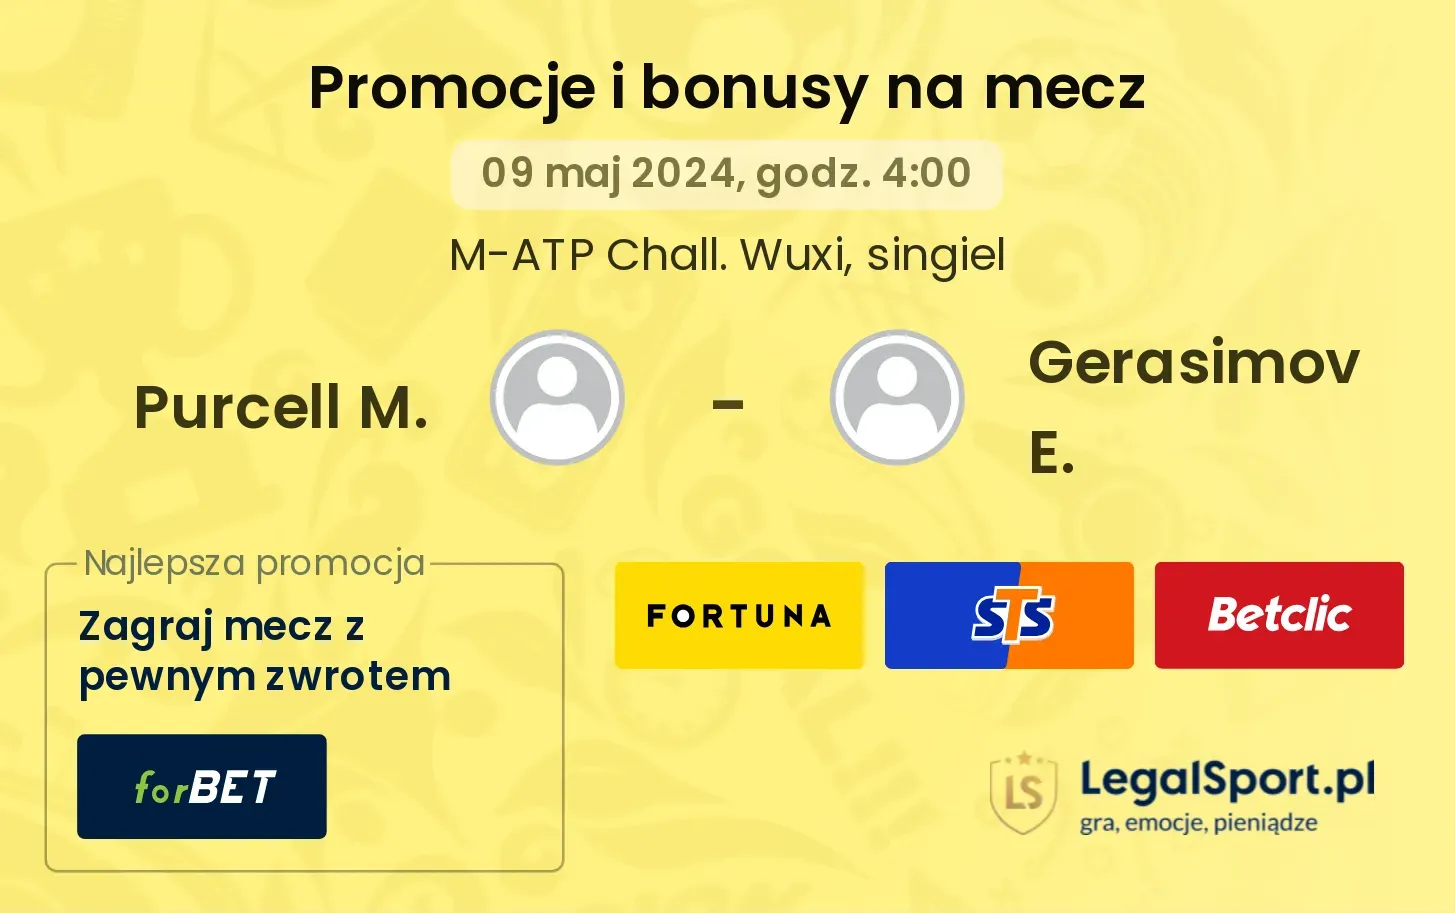 Purcell M. - Gerasimov E. promocje bonusy na mecz